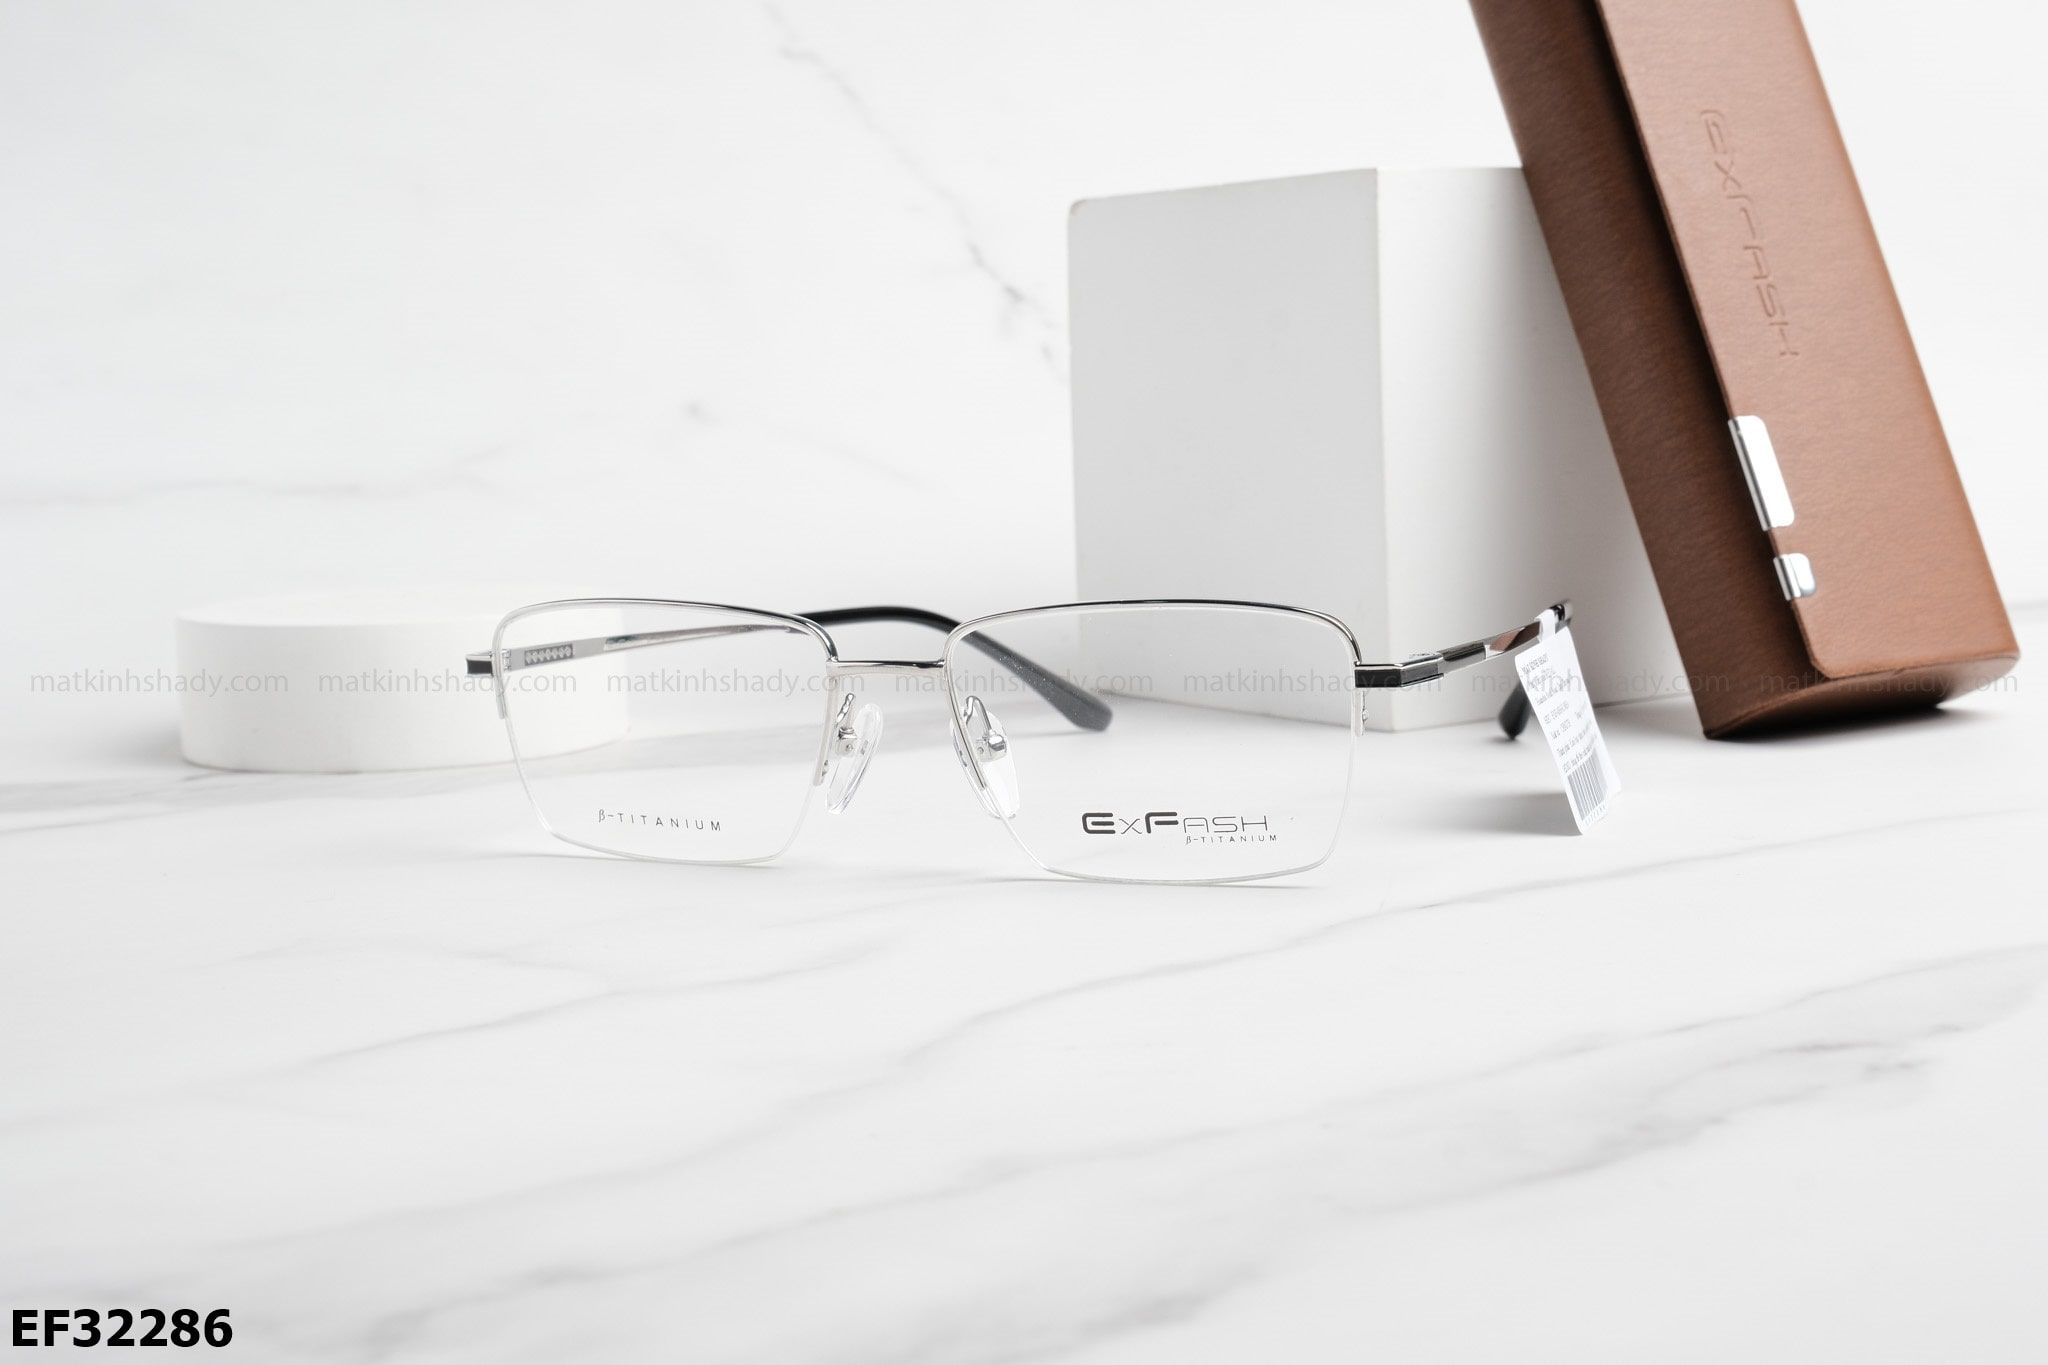  Exfash Eyewear - Glasses - EF32286 